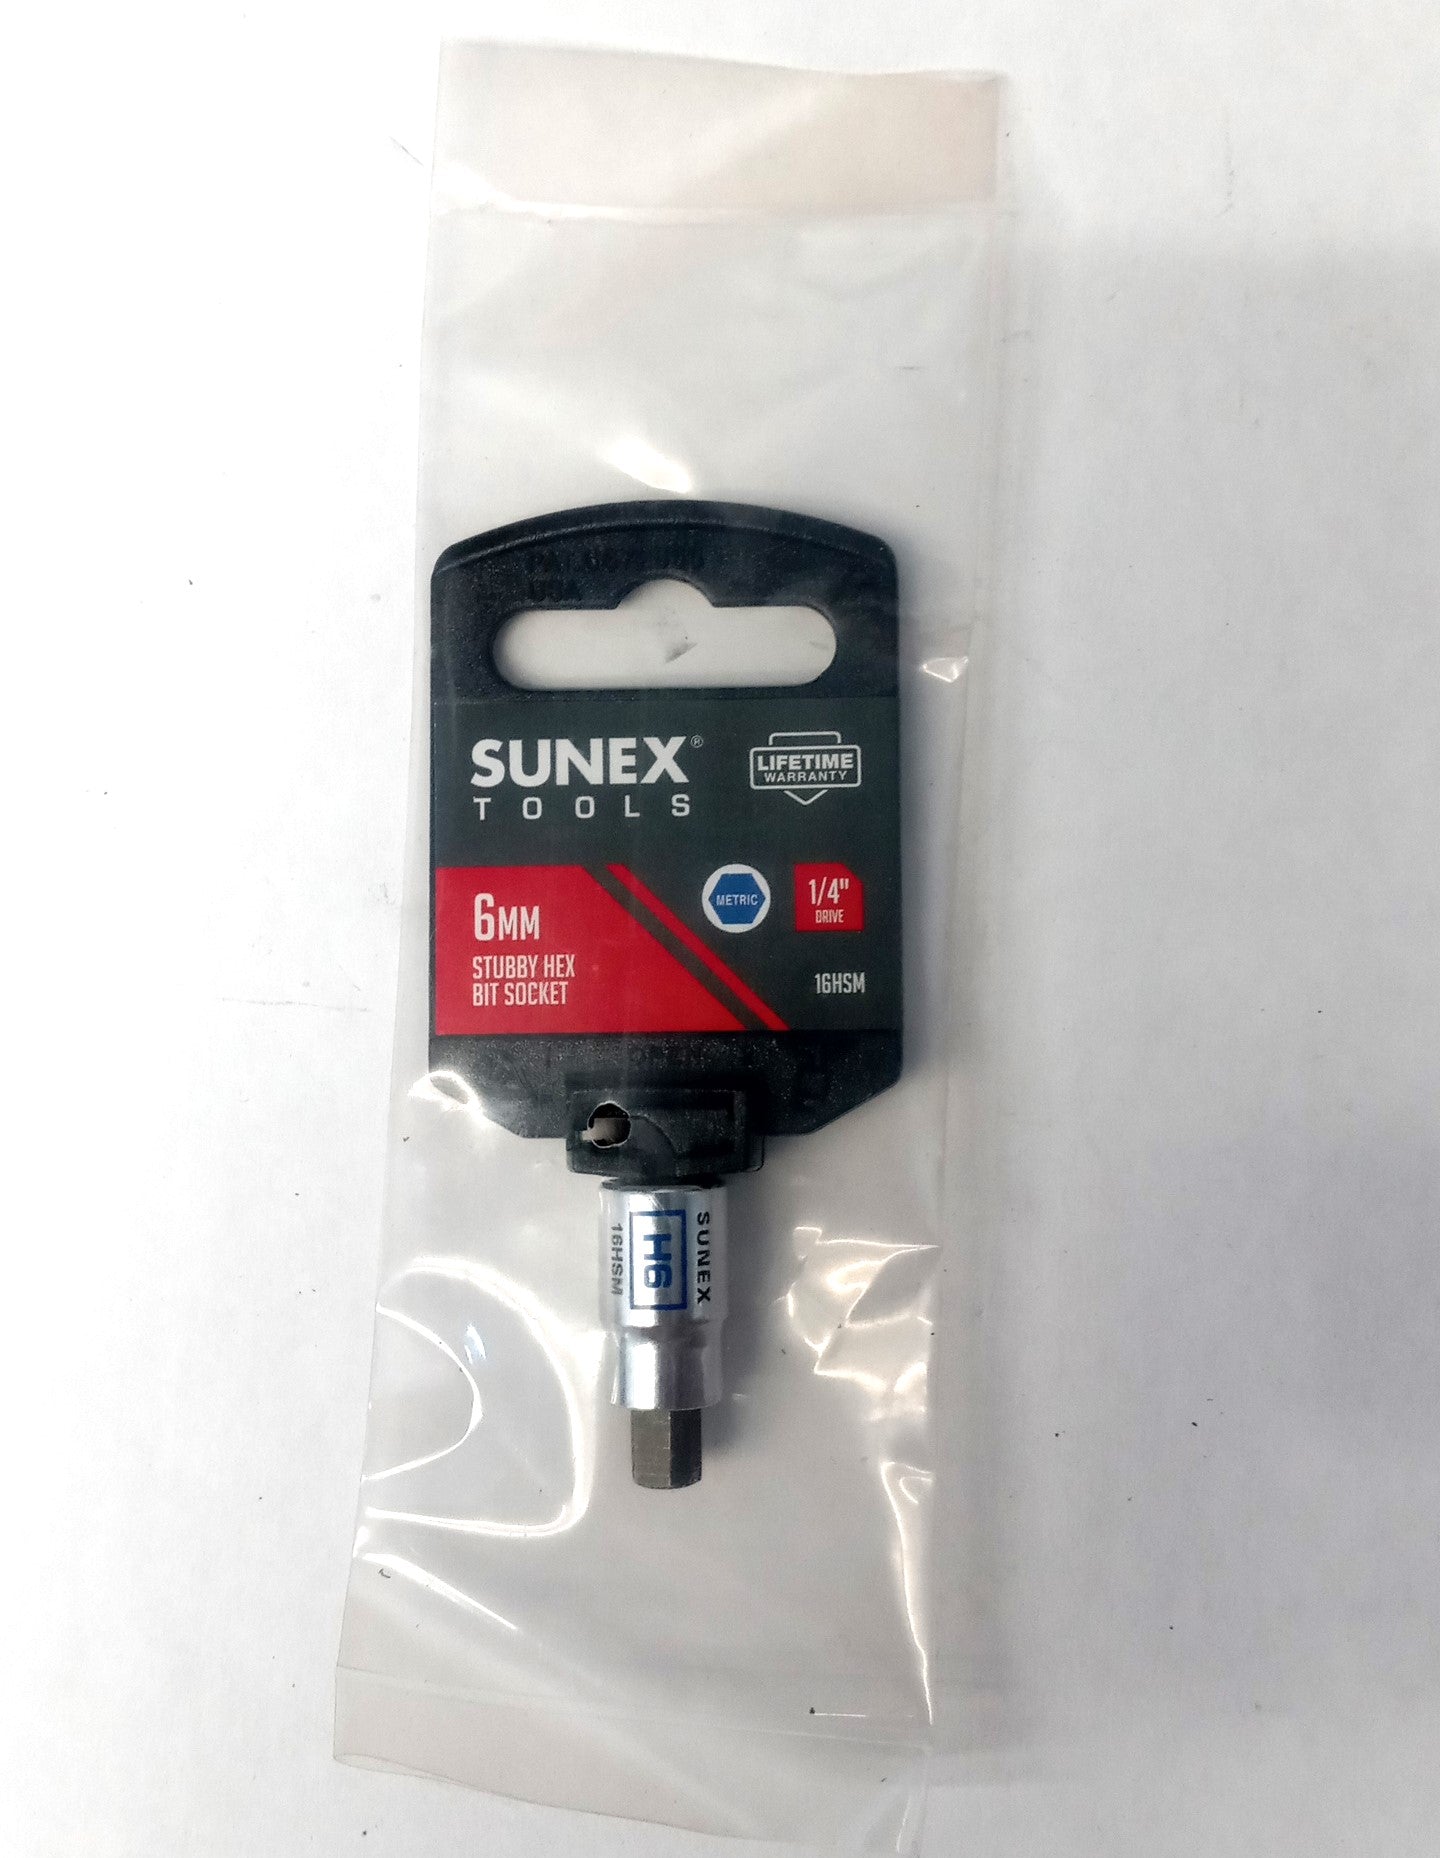 Sunex 16HSM 6mm Stubby Hex Bit Socket